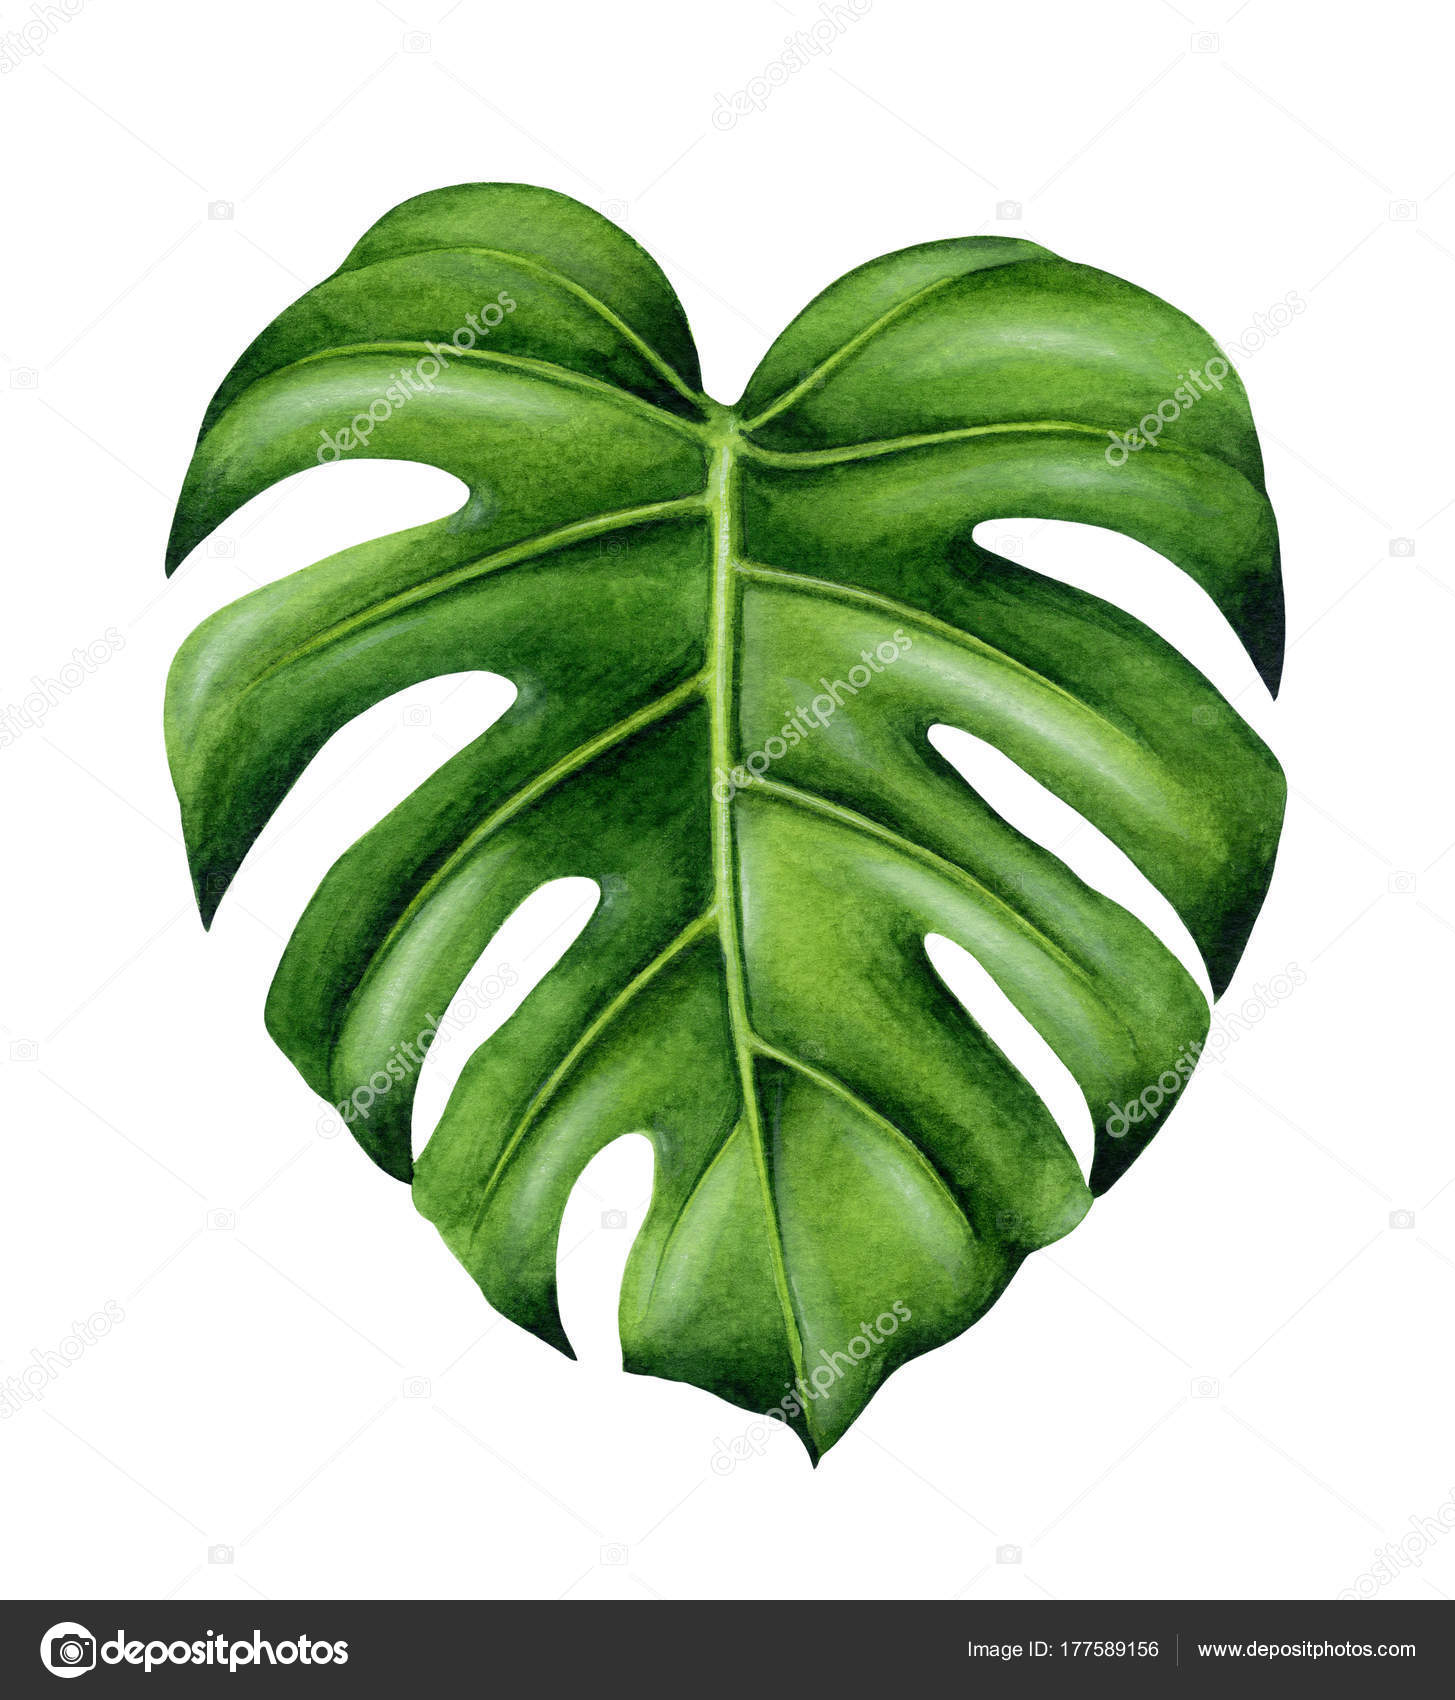 Green monstera leaf. — Stock Photo © jviktoriia.gmail.com #177589156